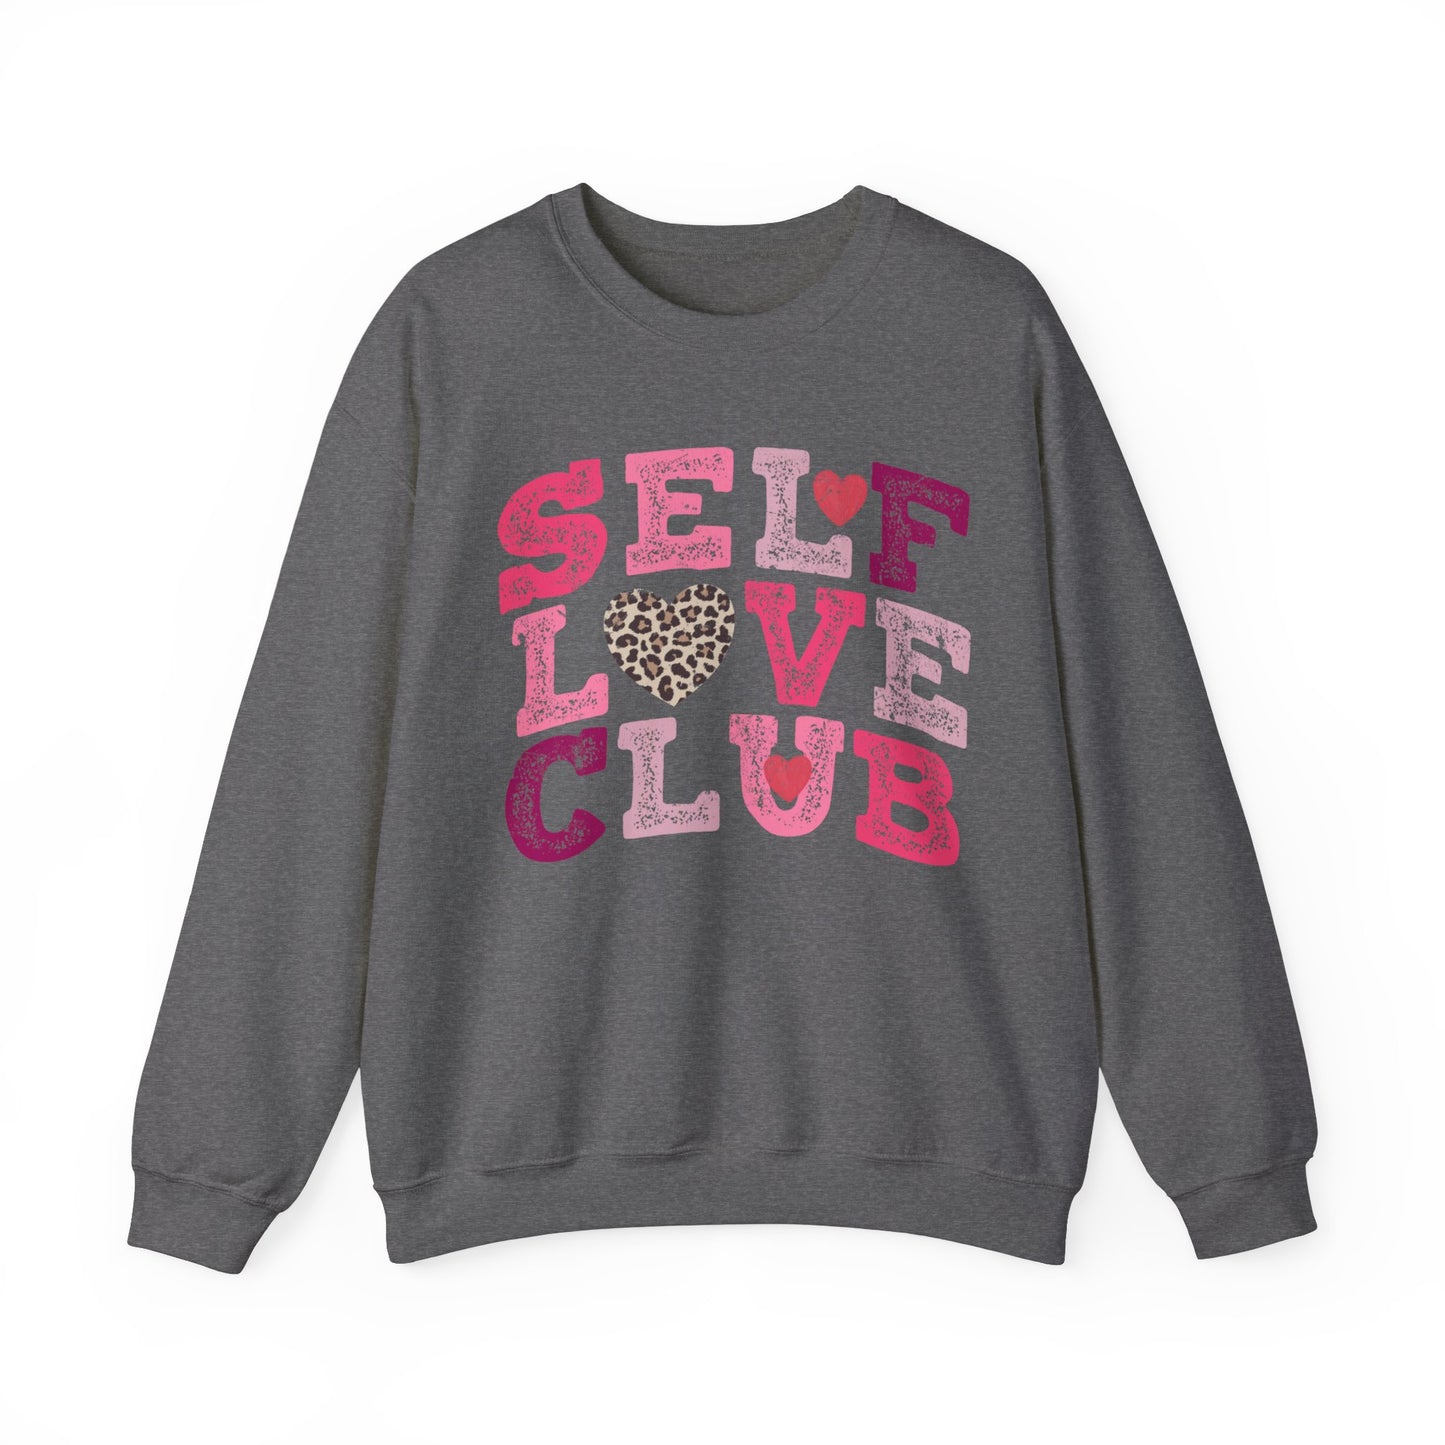 Self Love Club Sweatshirt Valentine's Day Sweatshirt, Cute Retro Graphic Crewneck